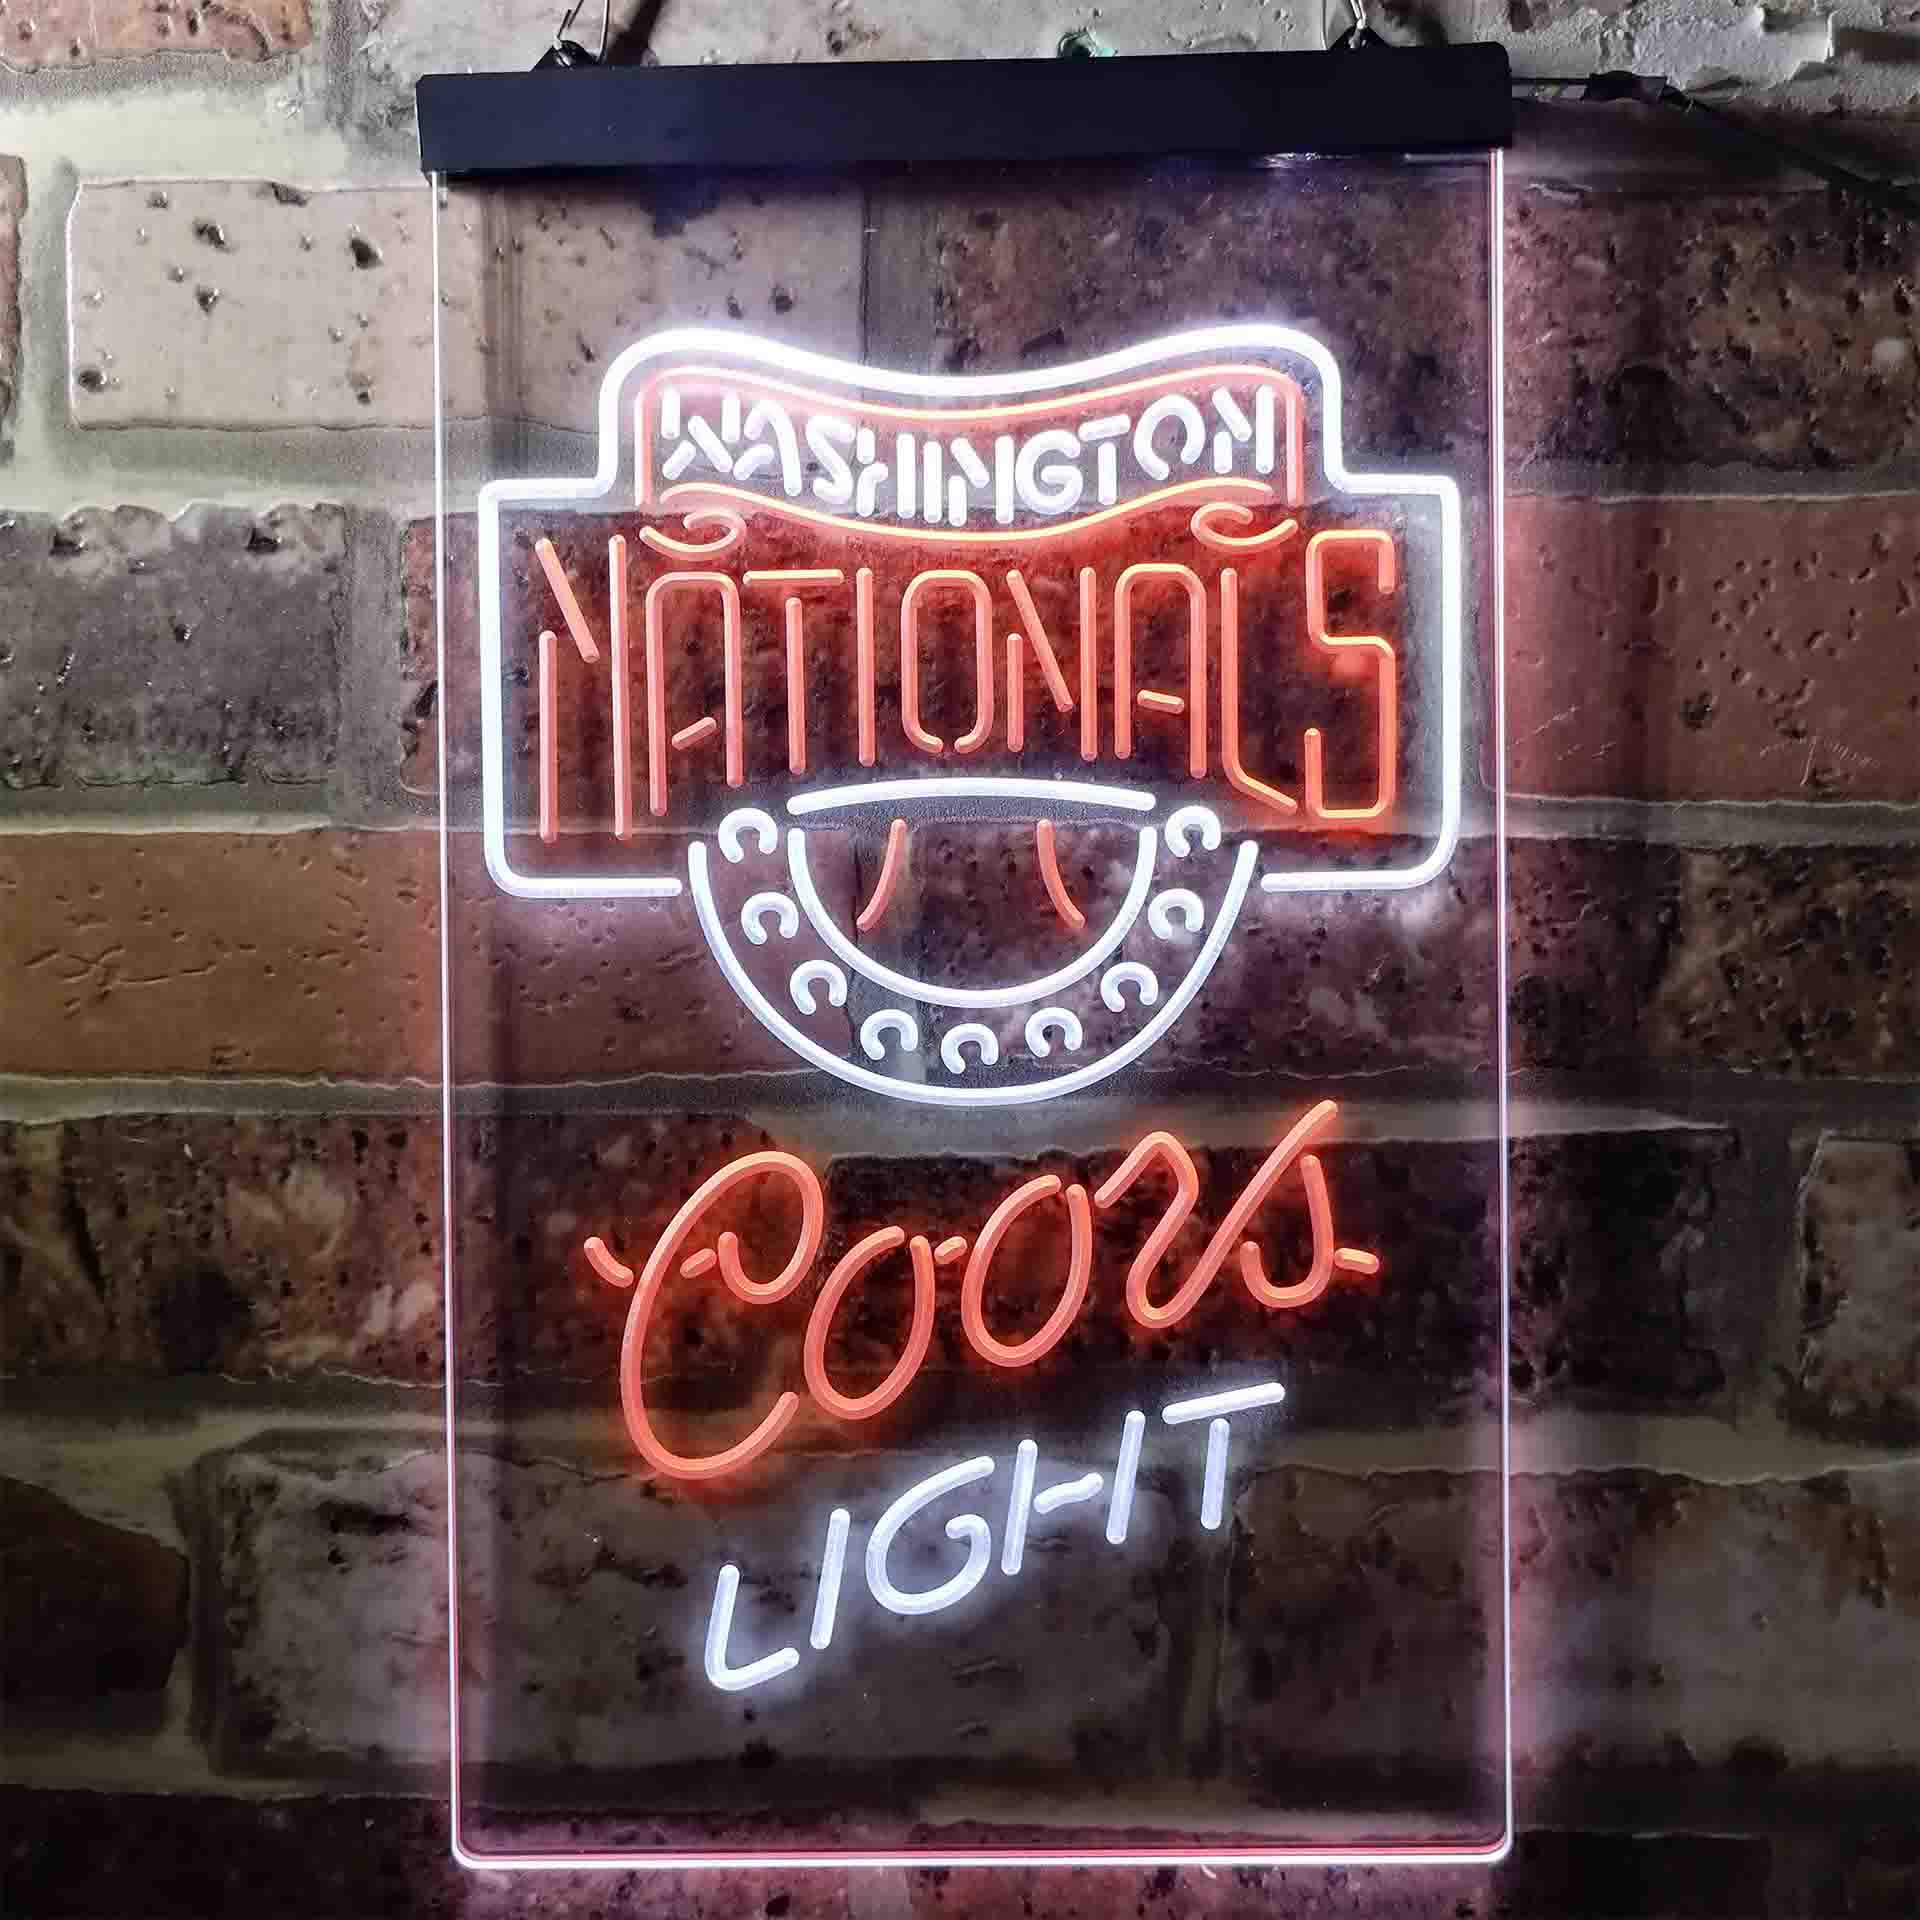 Washington Nationals Coors Light Neon-Like LED Sign